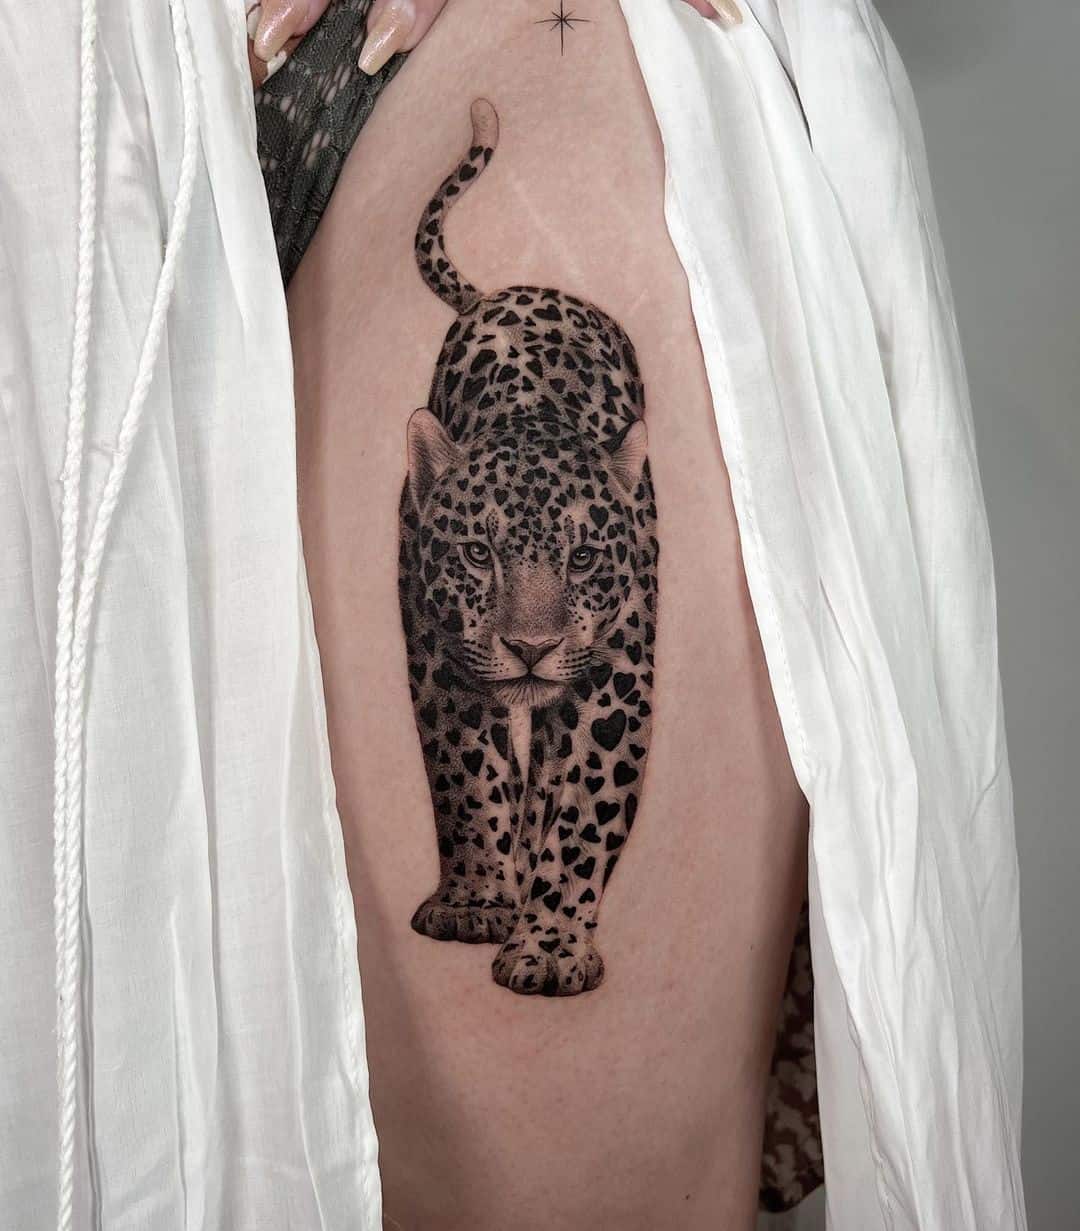 Leopard portrit tattoo by okeanos.tattoo